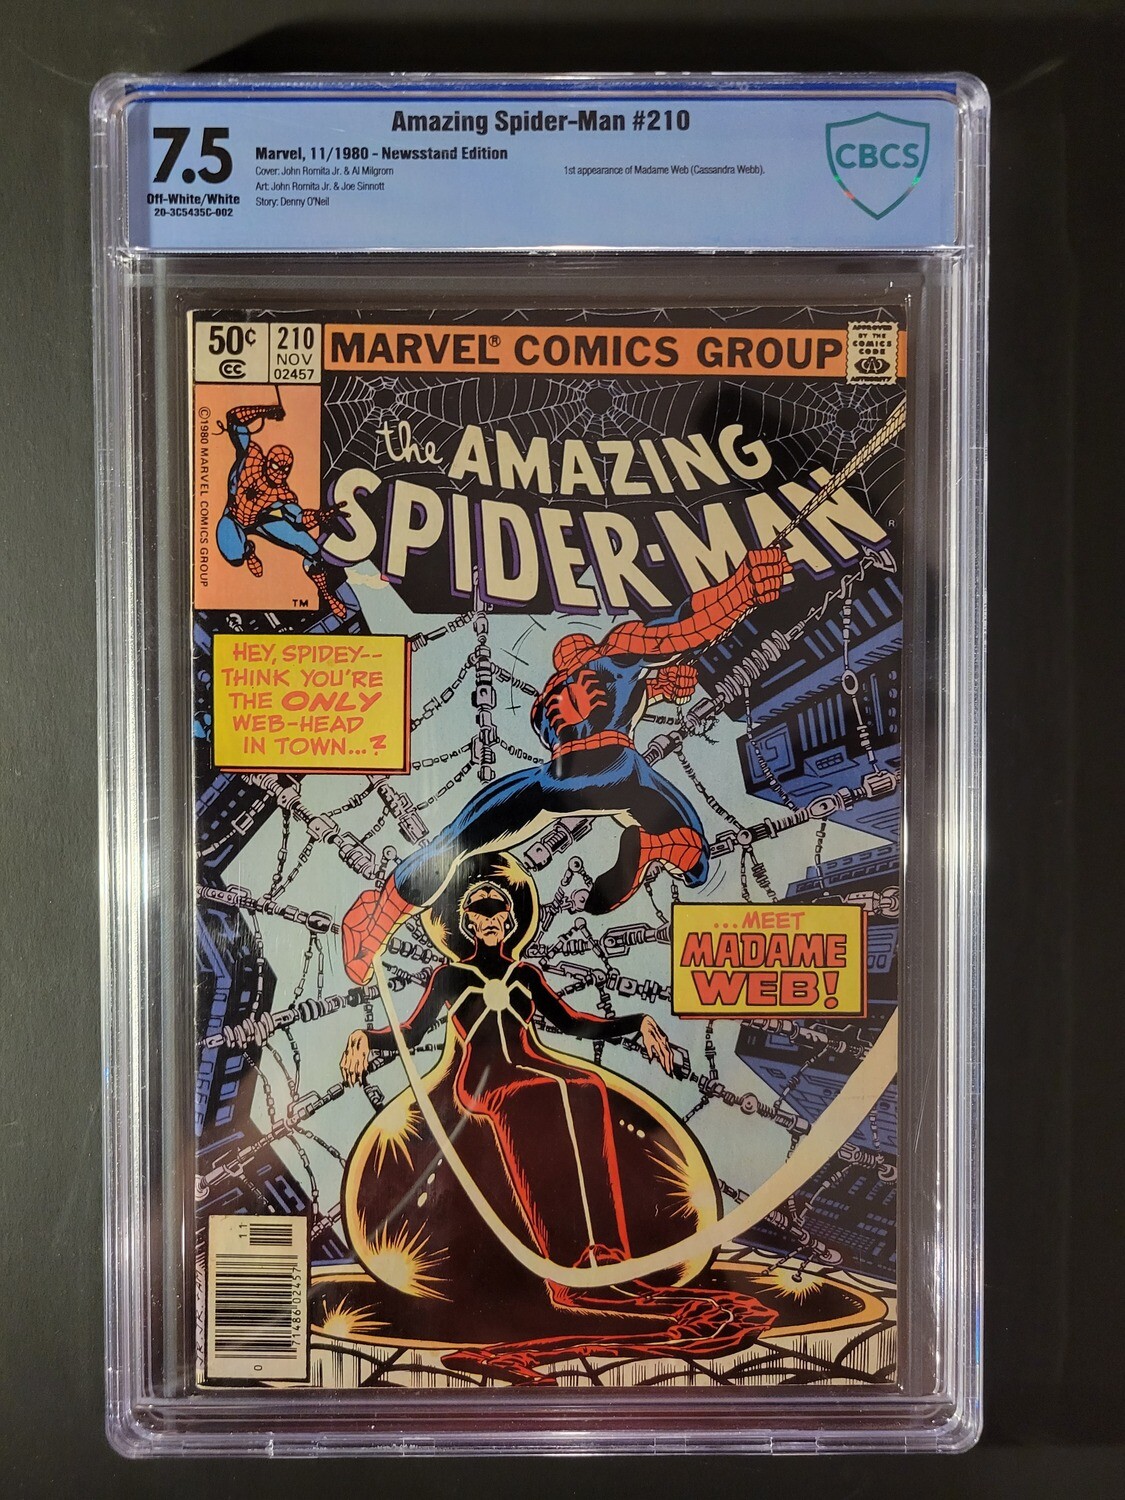 Amazing Spider-Man #210 CBCS 7.5 1st appearance of Madame Web (Cassandra Webb)